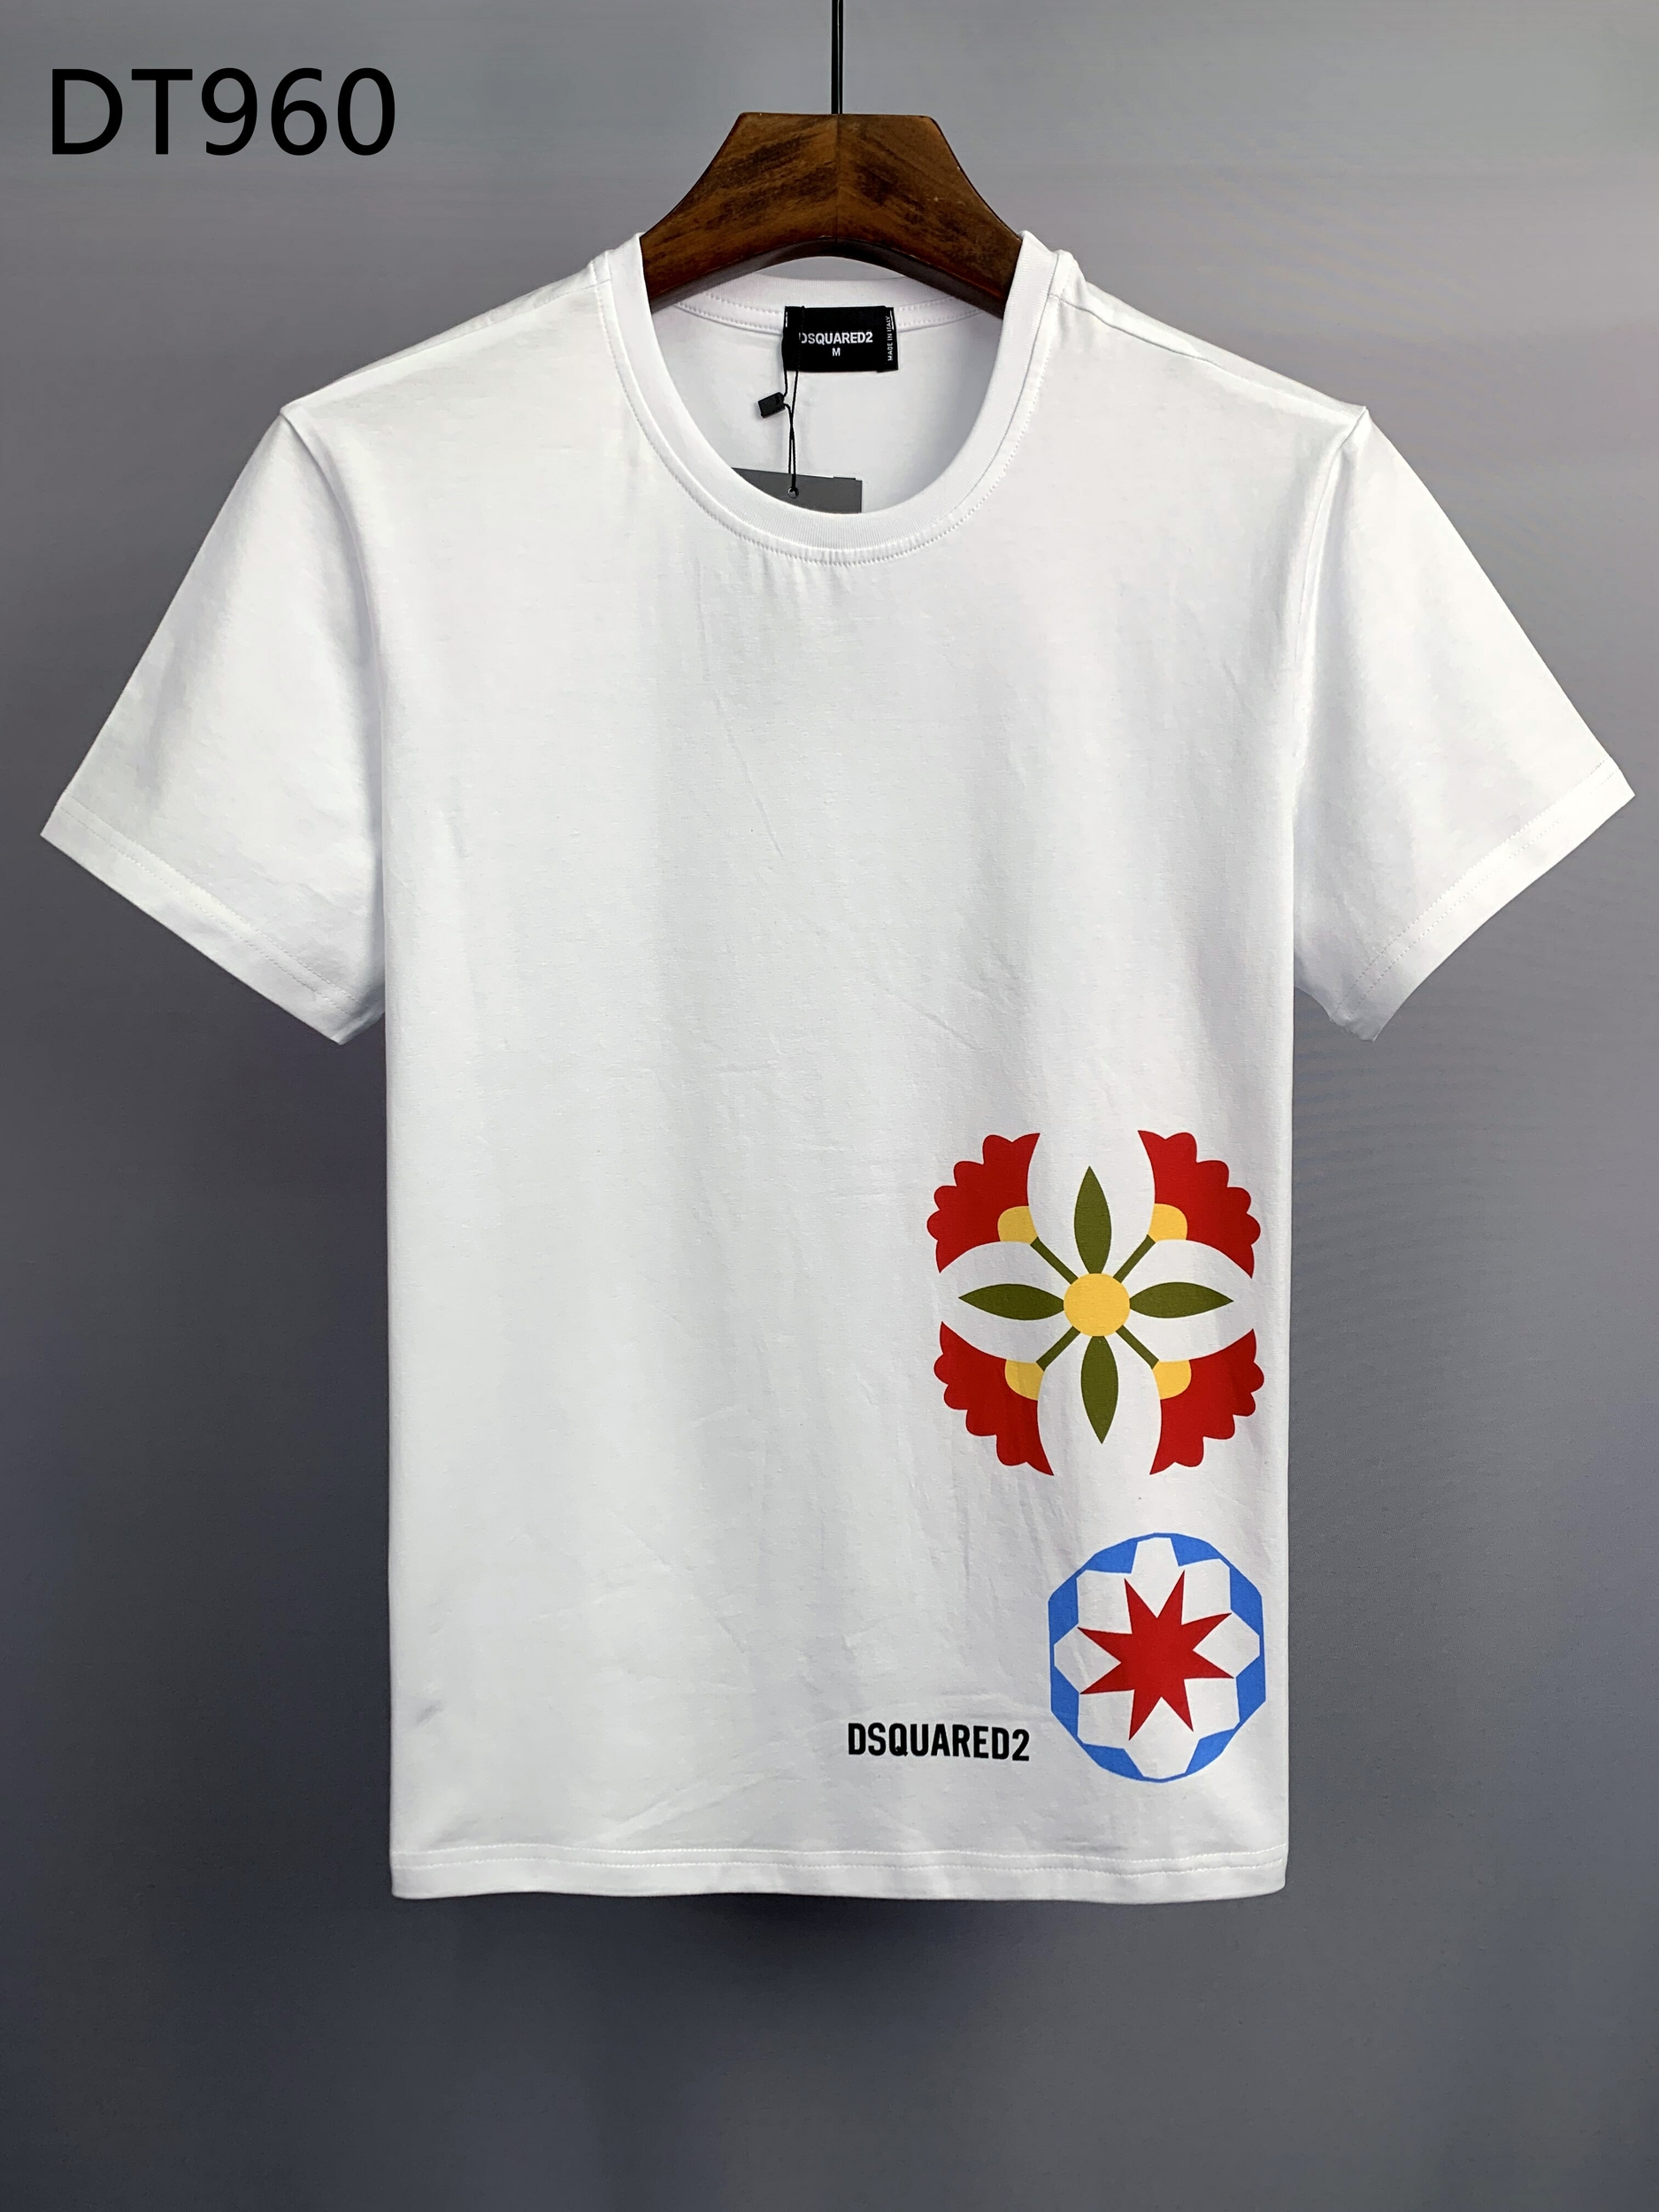 Dsquared2-T-shirt-col-rond-homme-femme-100-coton-lettres-simples-mode-d-contract-e-tendance